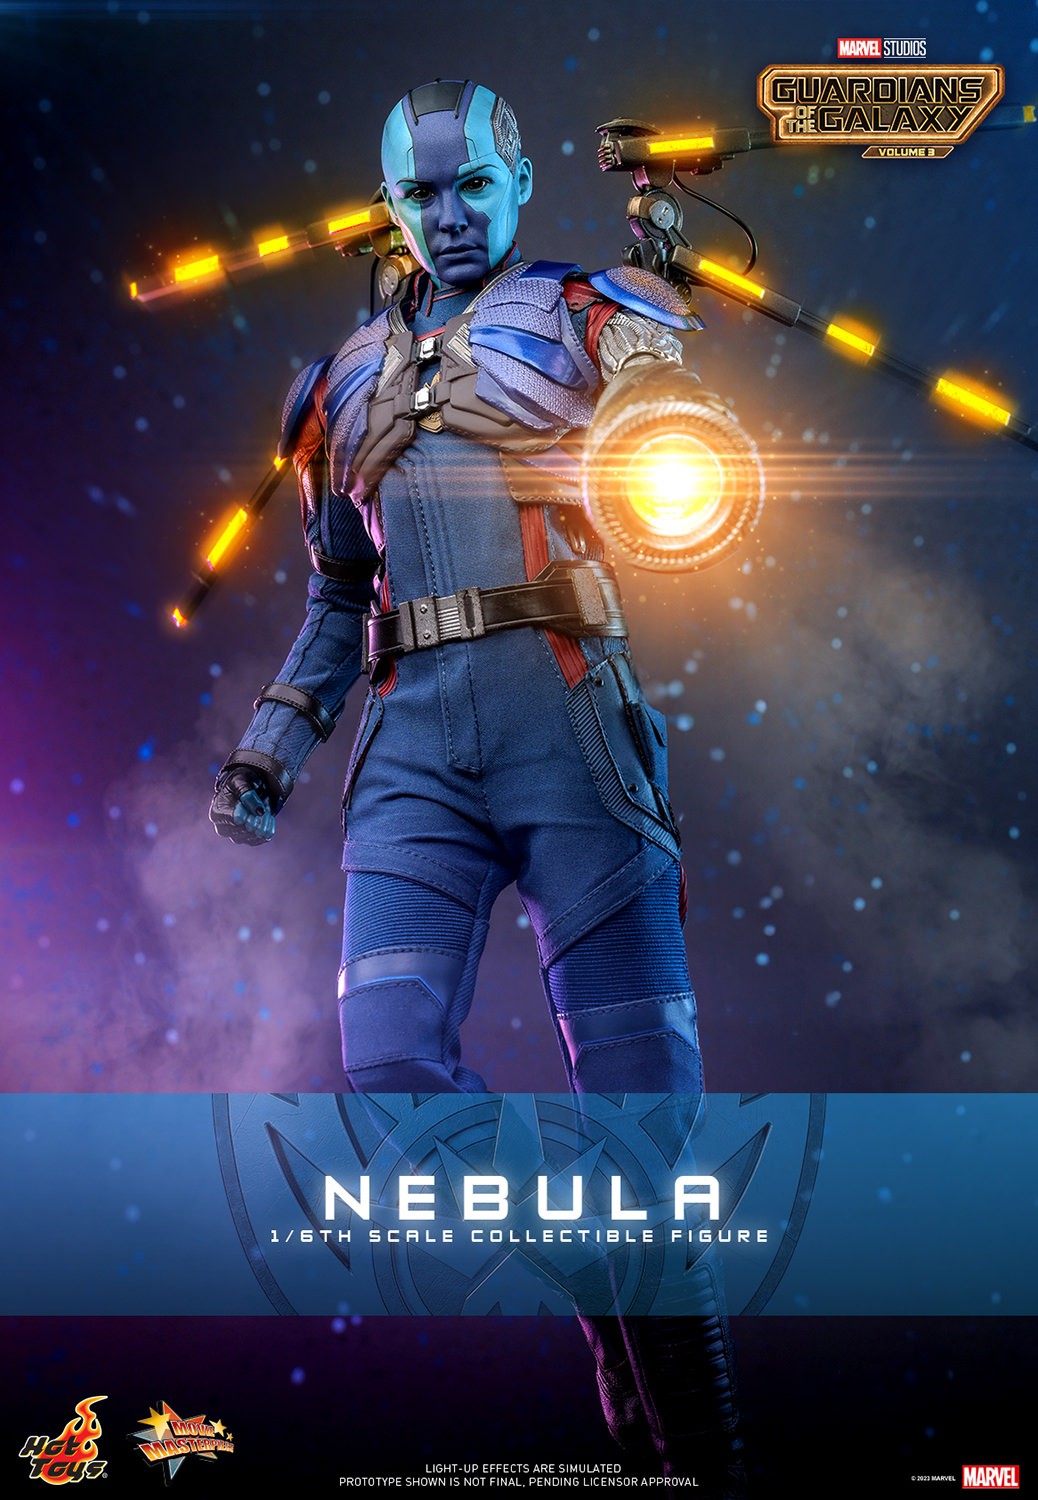 Nebula (Prototype Shown) View 1